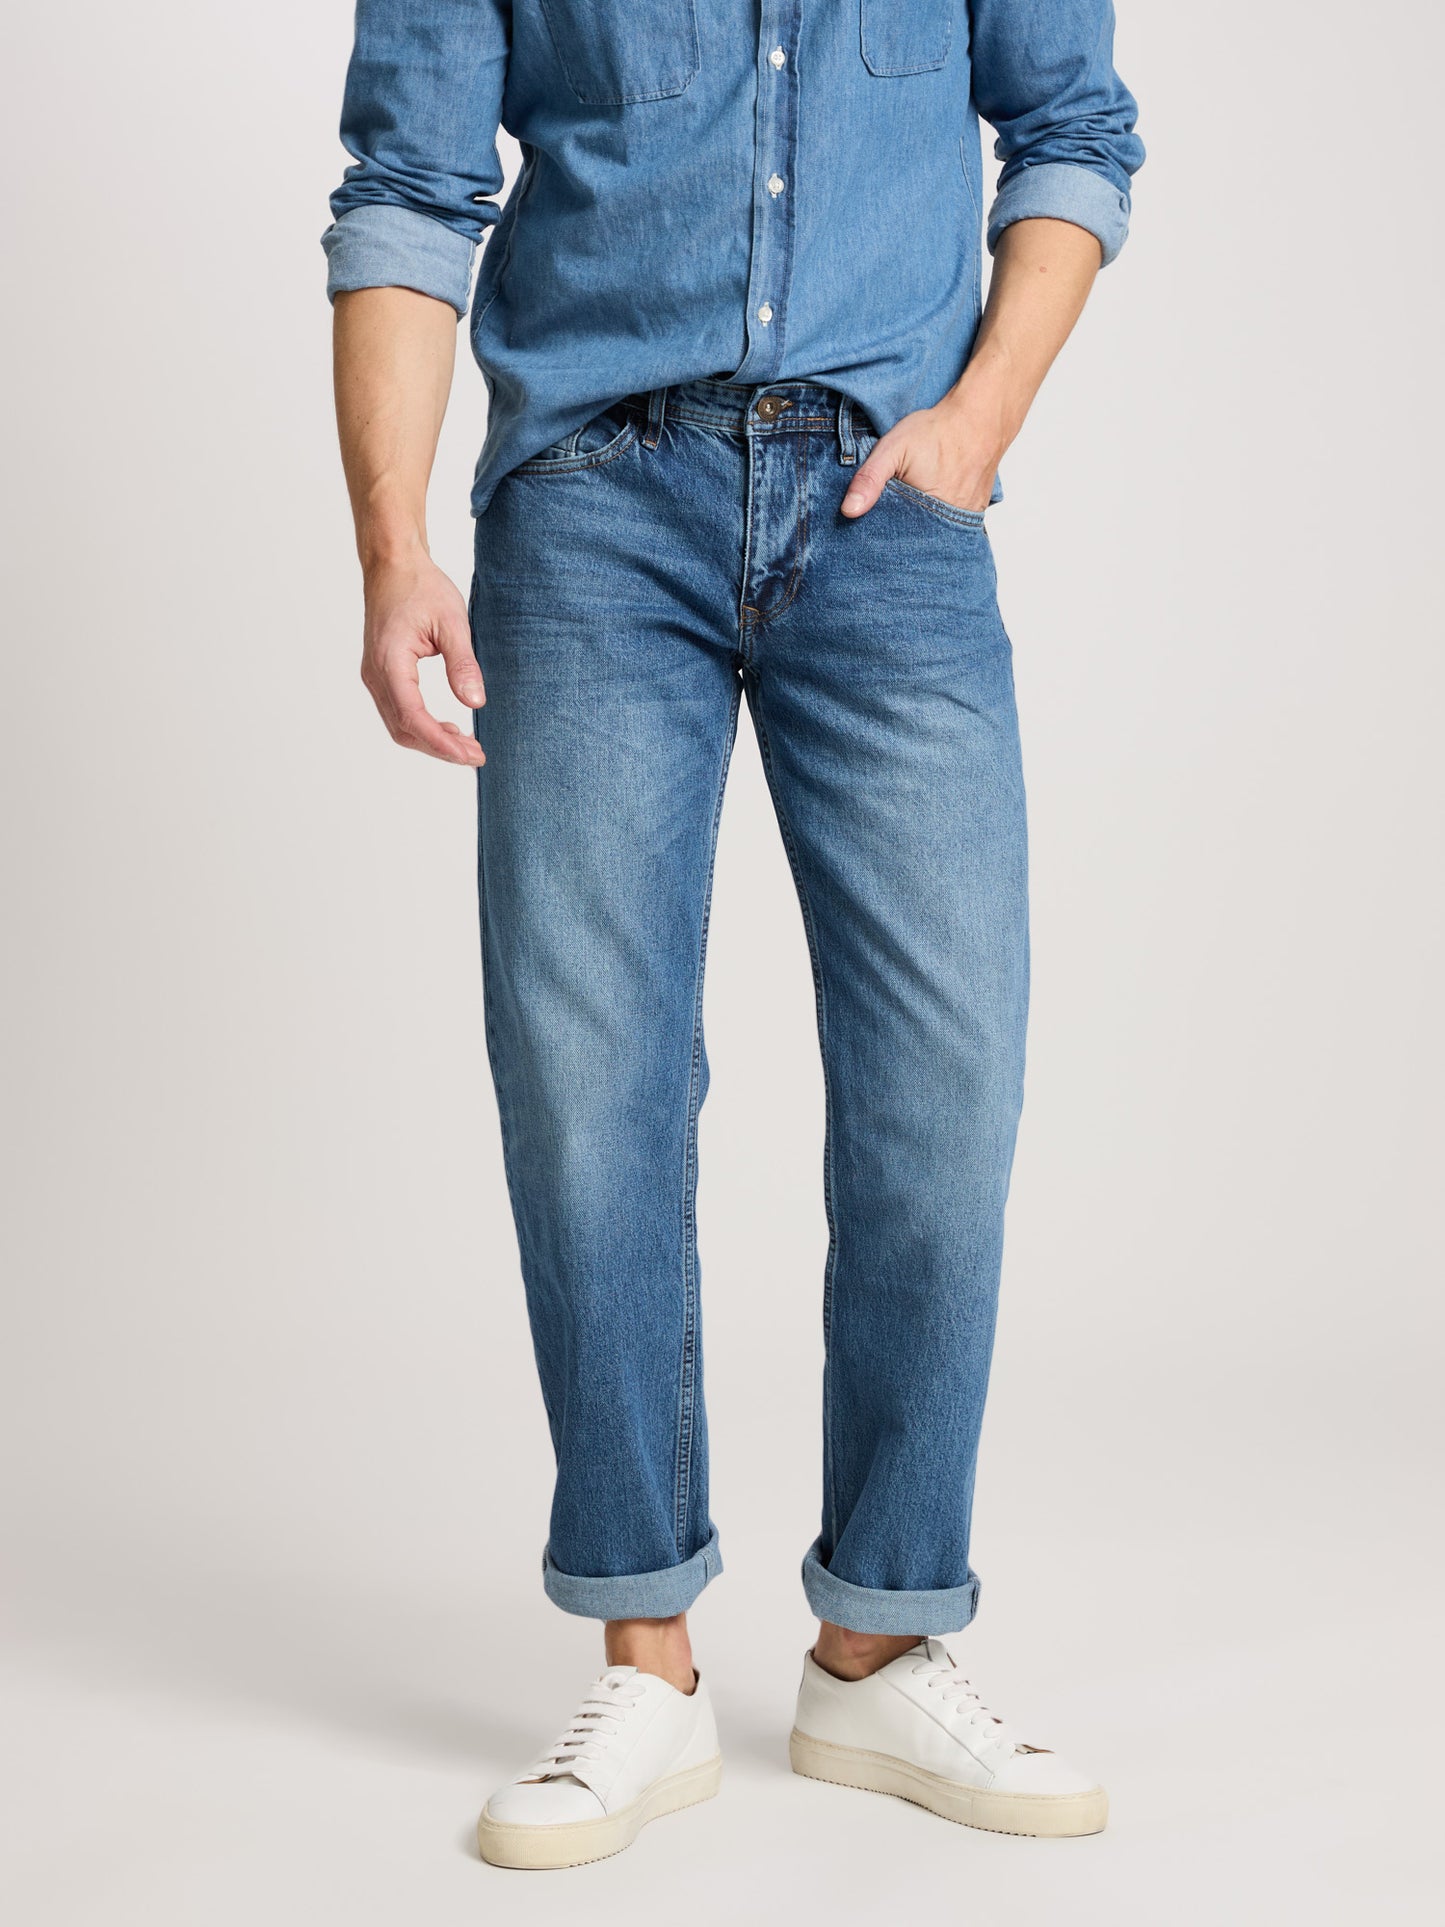 Antonio Men's Jeans Relaxed Fit Regular Waist Straight Leg Mid Blue